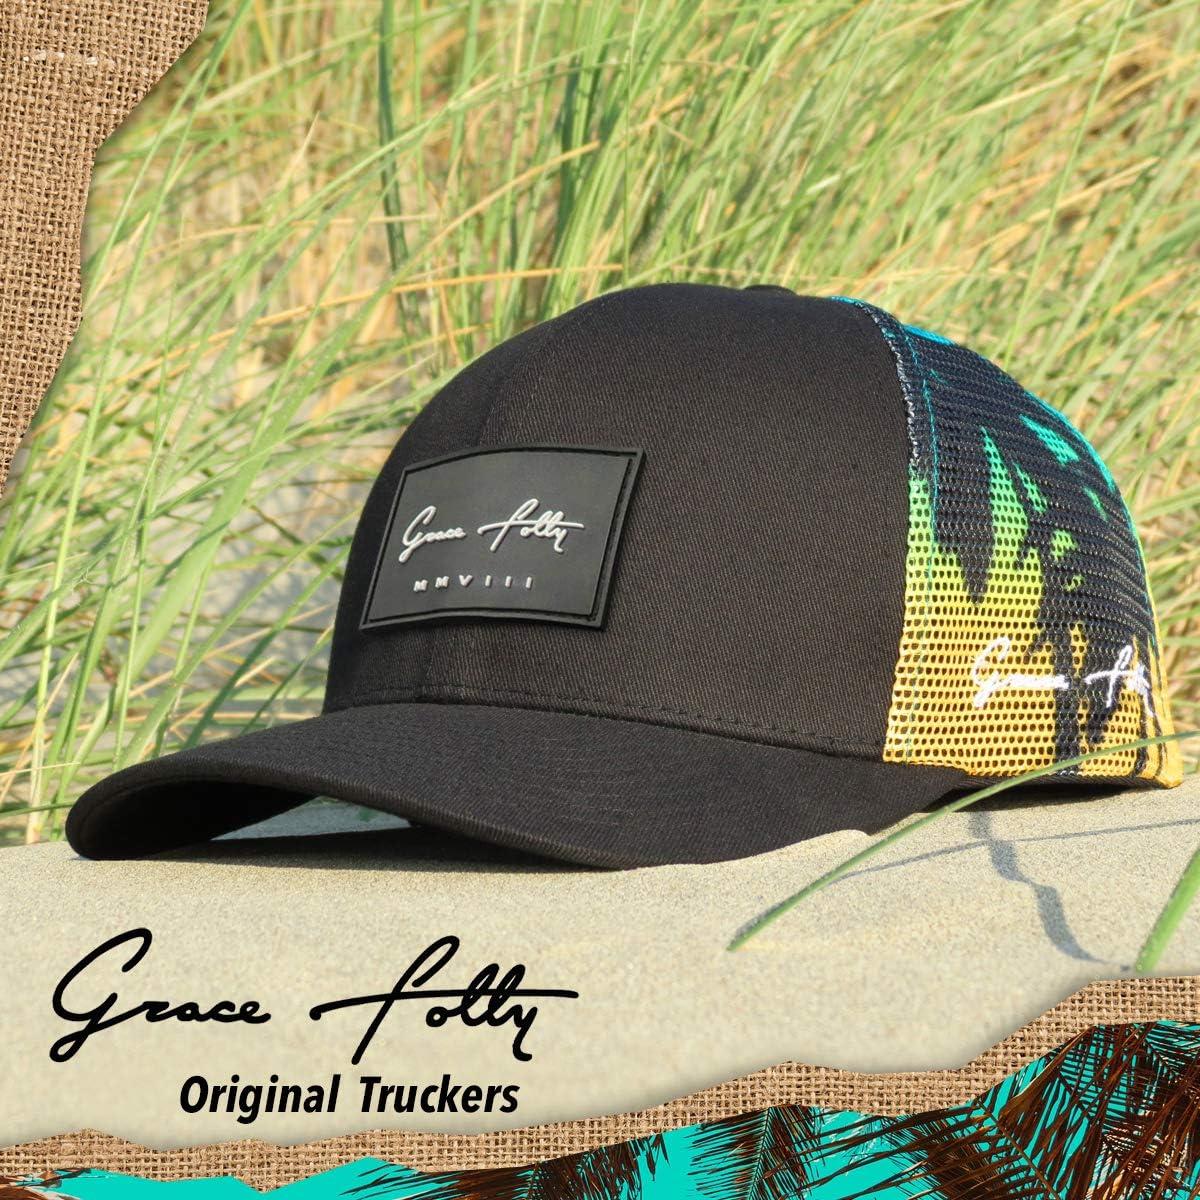 Grace Folly Trucker Hat for Men or Women- Many Cool Designs Palm Beach